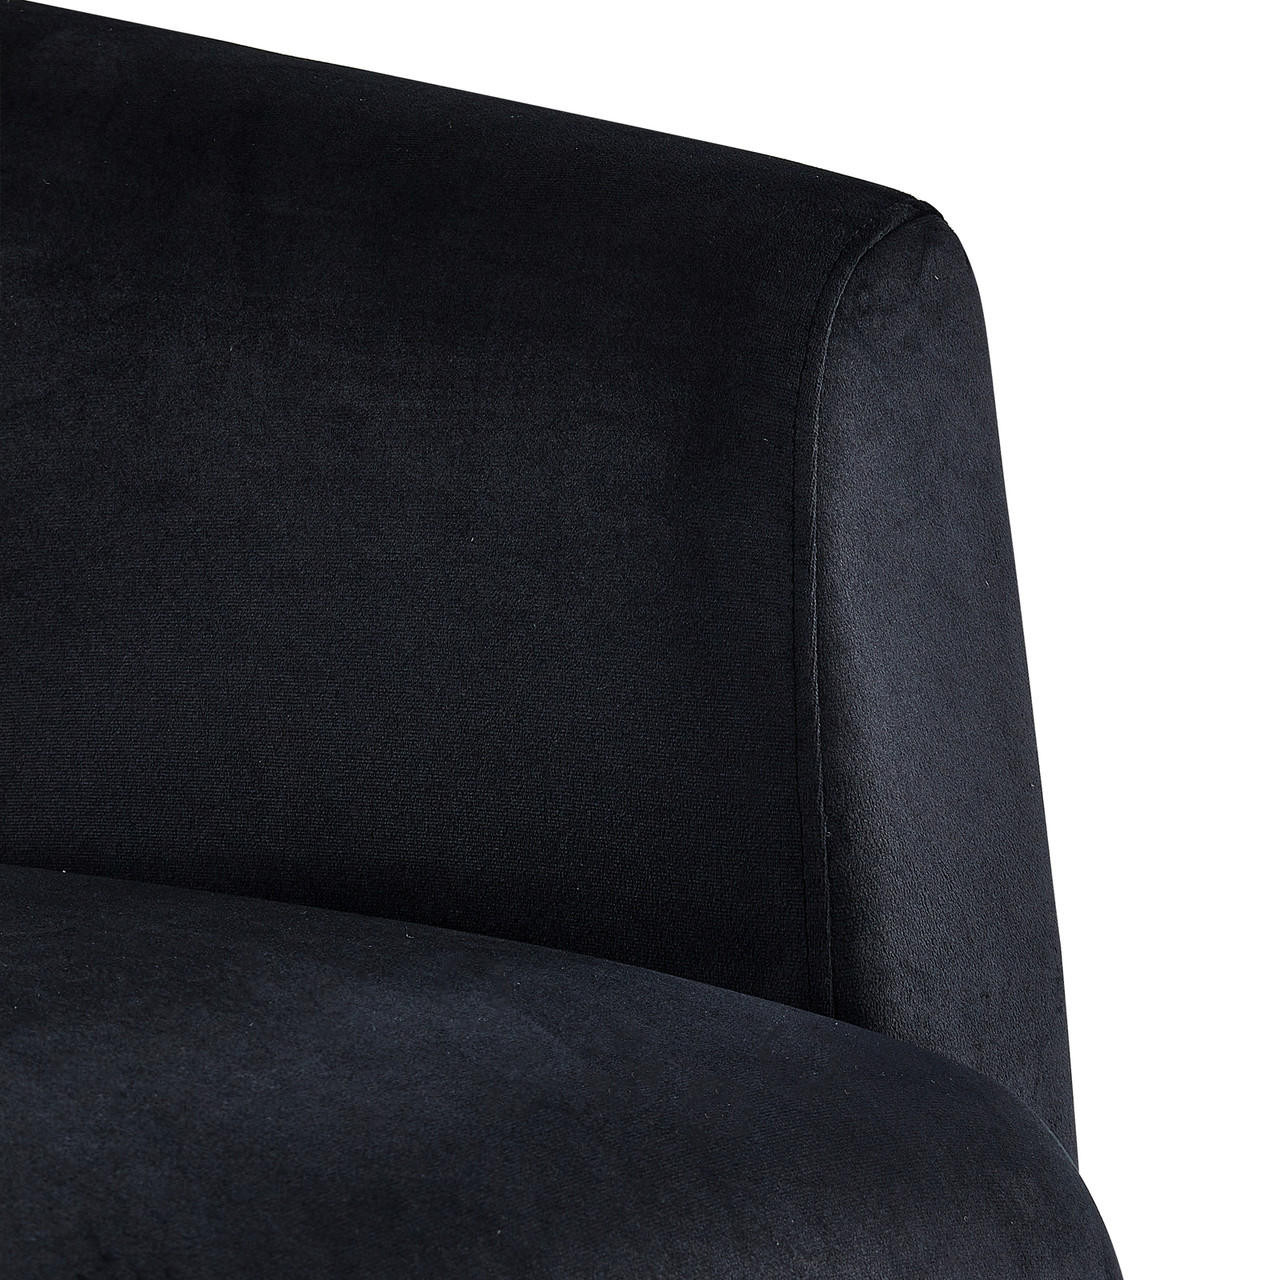 Bonnell Velvet Accent Chair with Gold Legs - Black